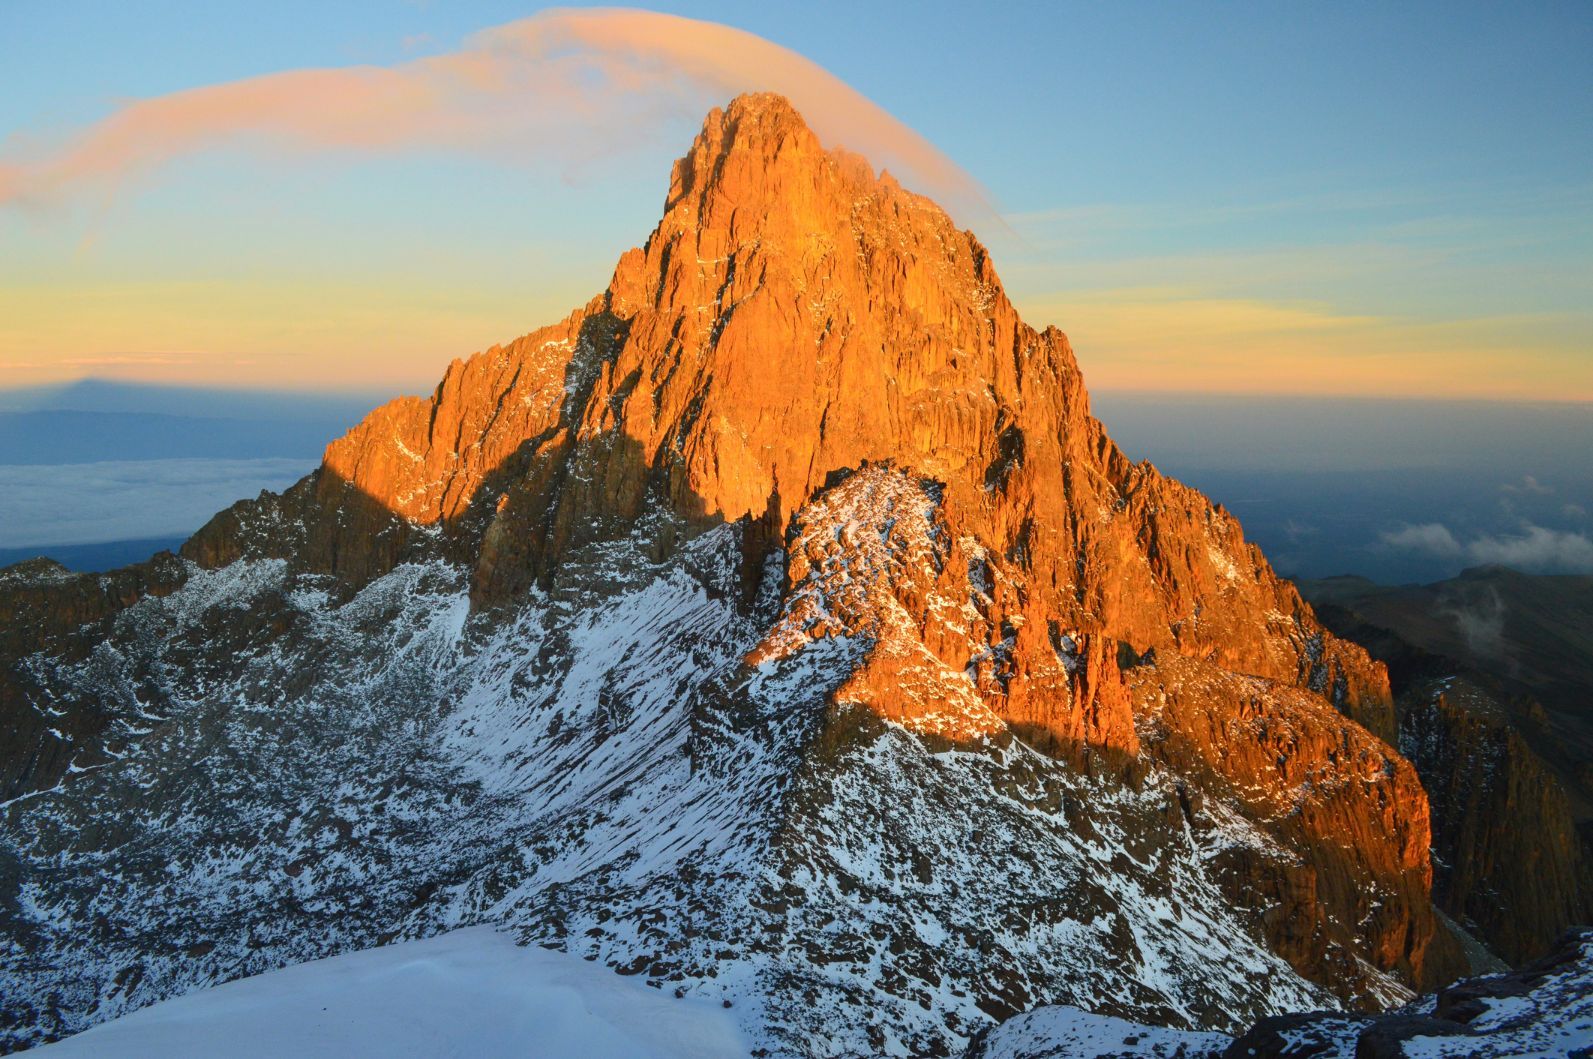 Mount Kenya - the Tallest Mountain in Africa.